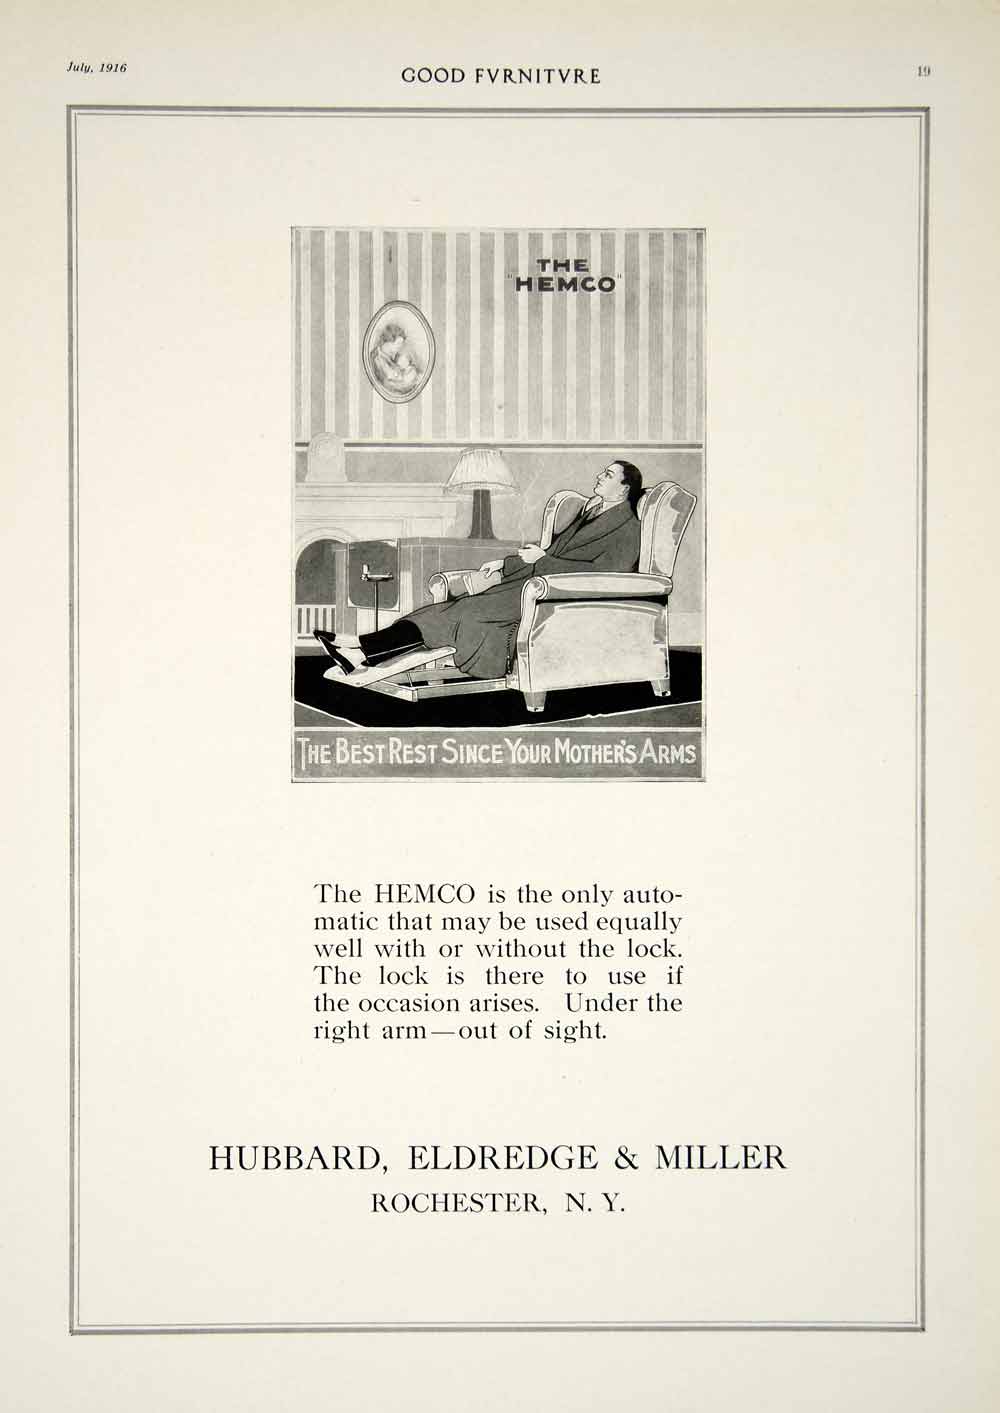 1916 Ad Vintage HEMCO Reclining Chair Recliner Hubbard Eldredge & Miller GF5